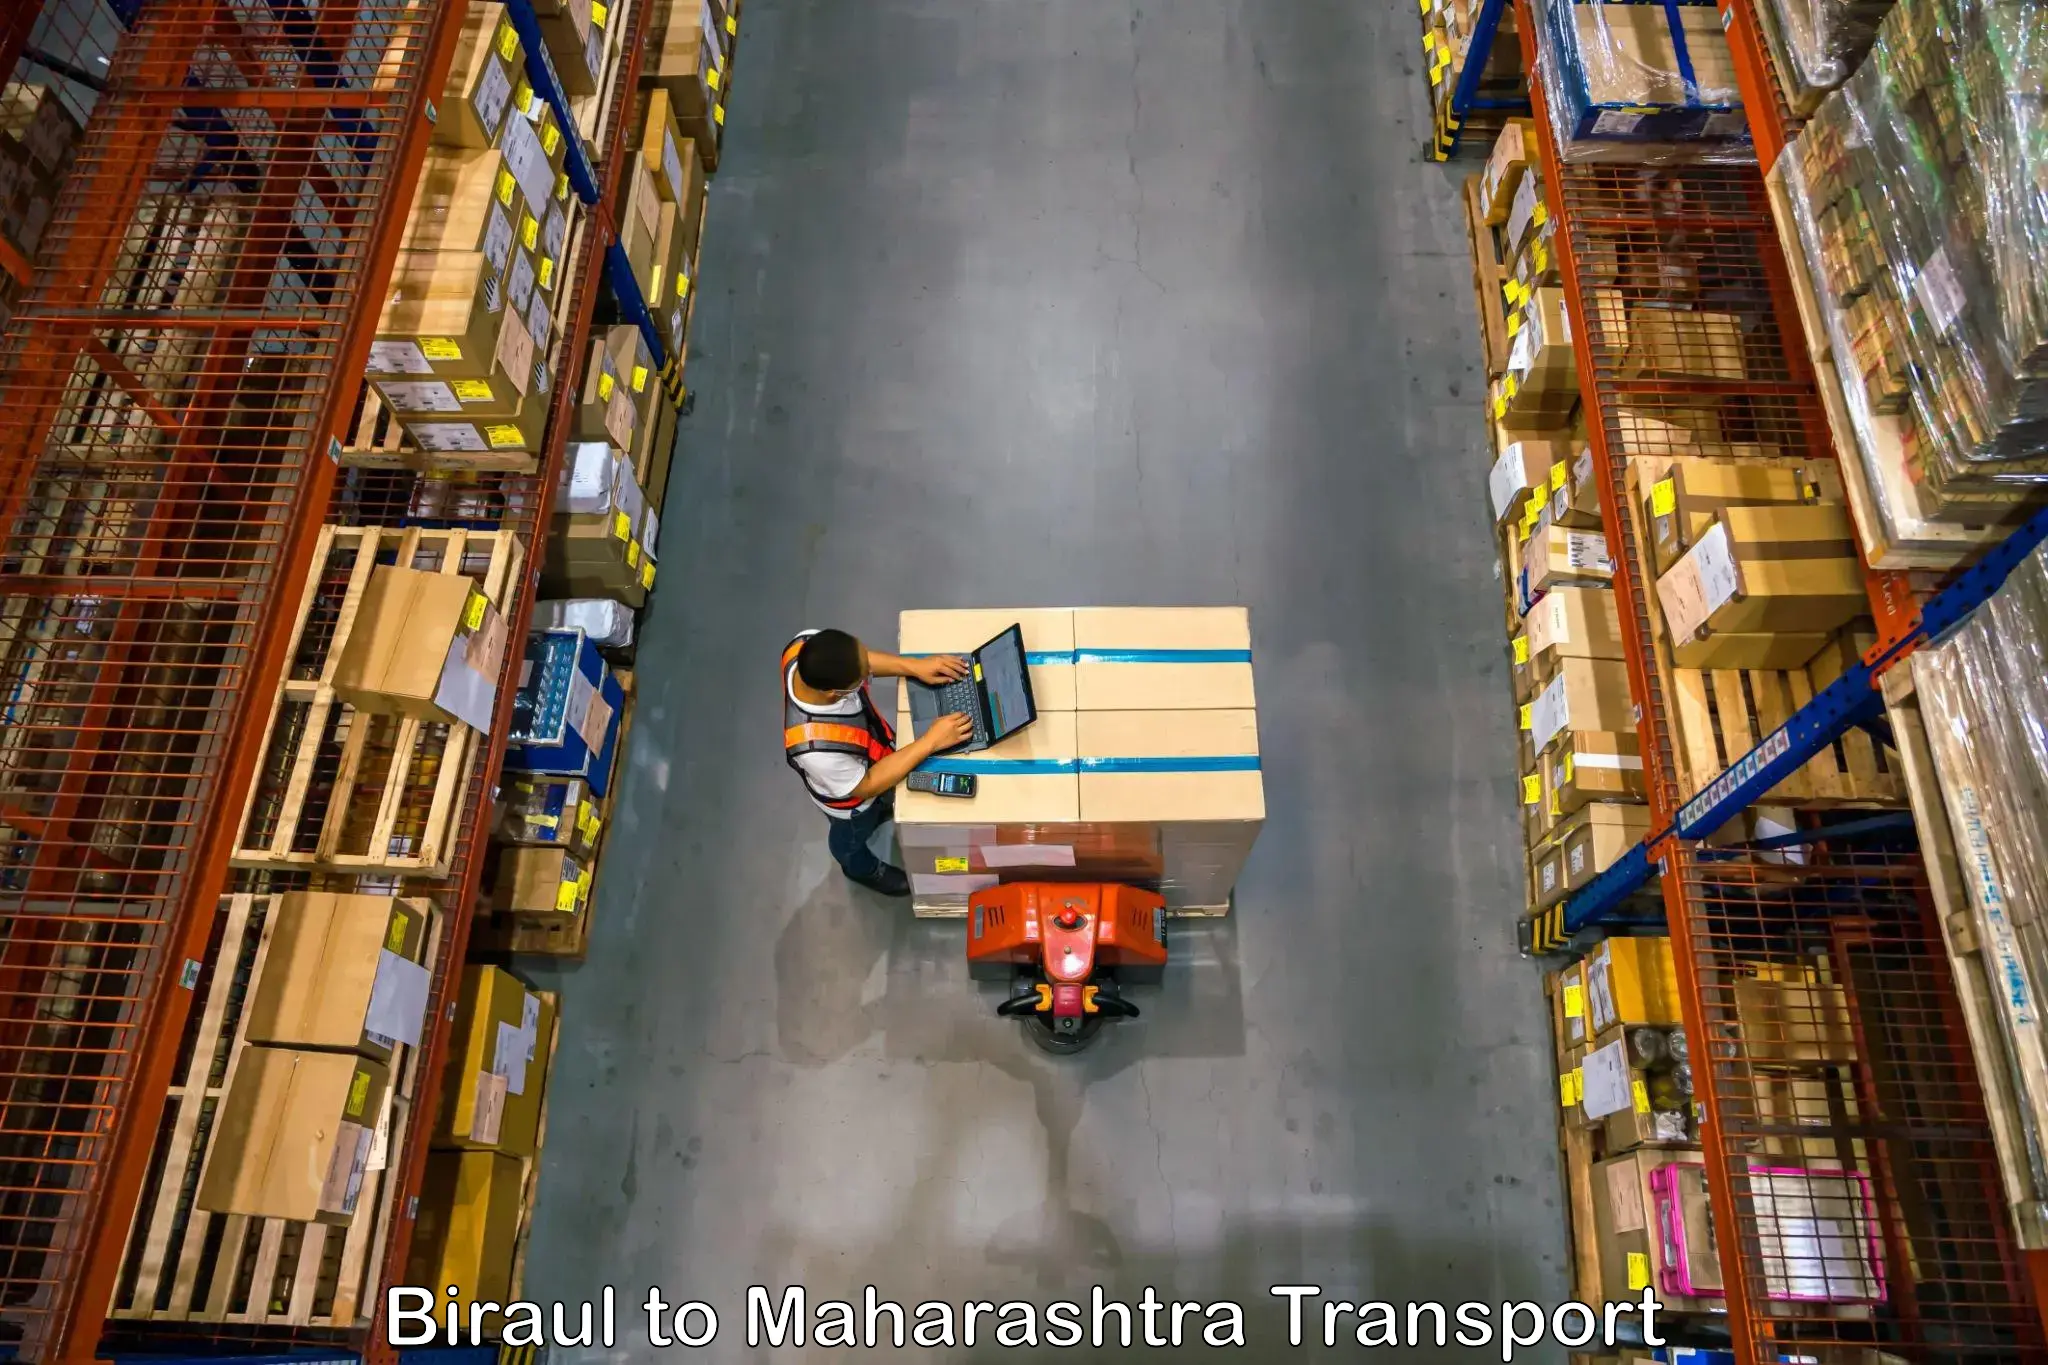 Truck transport companies in India Biraul to Dusarbid